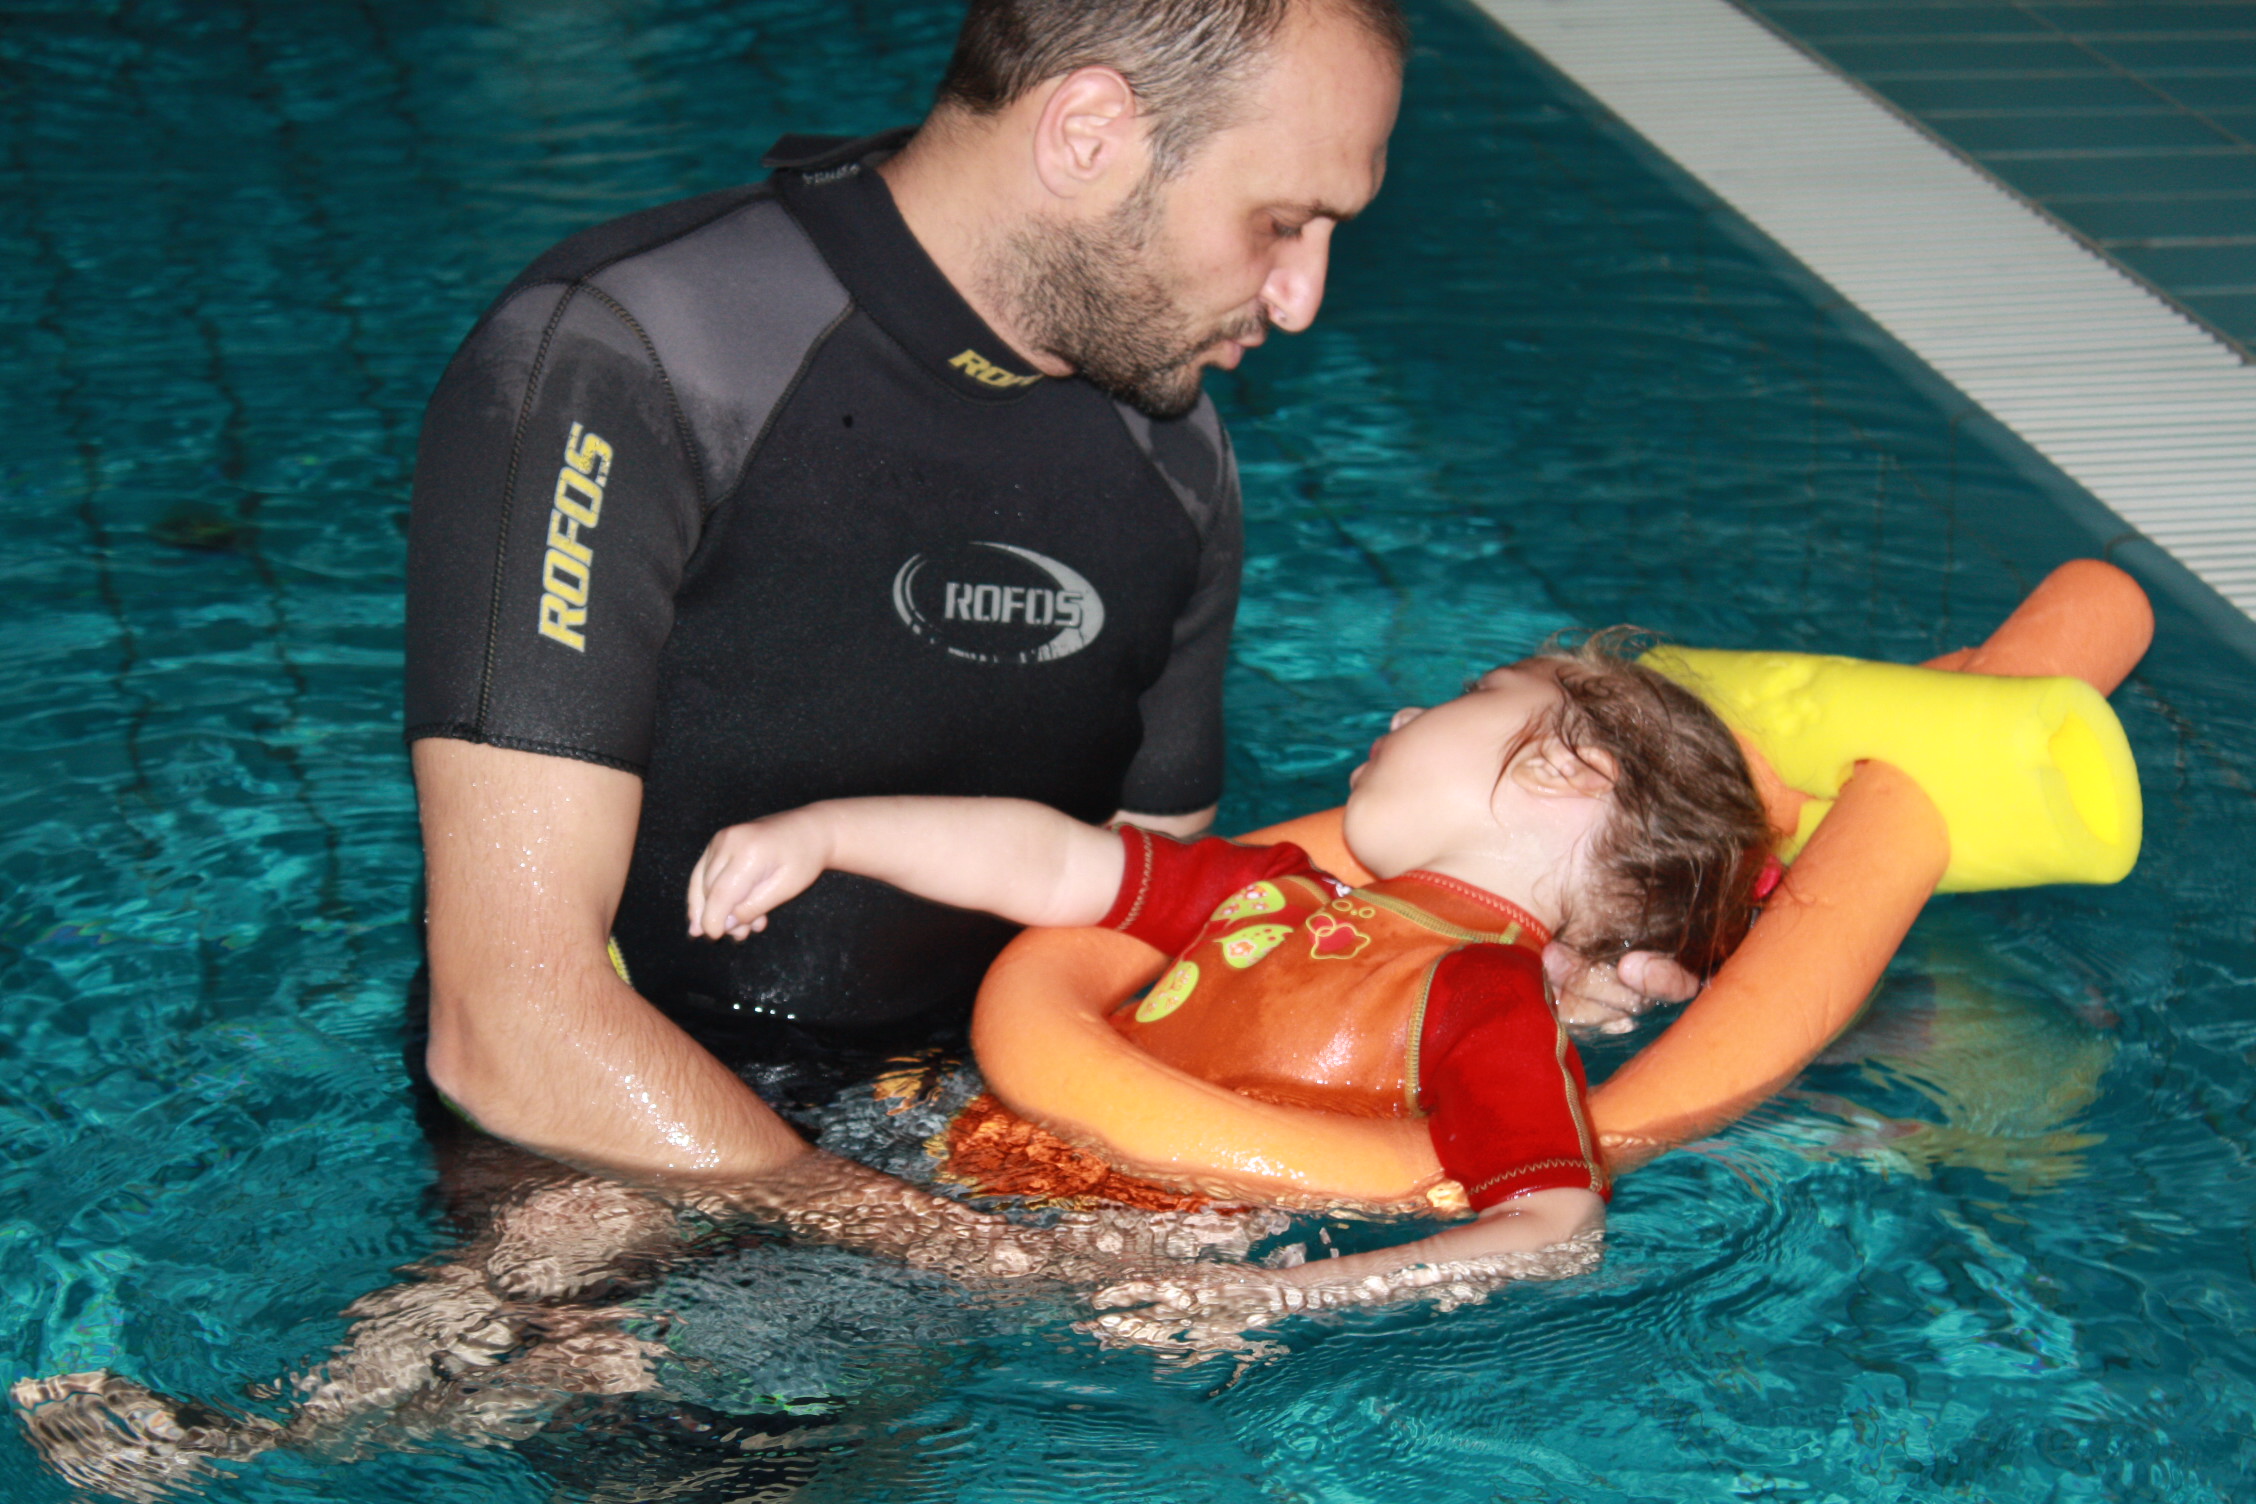 L'istruttore esegue una manovra riabilitativa in acqua